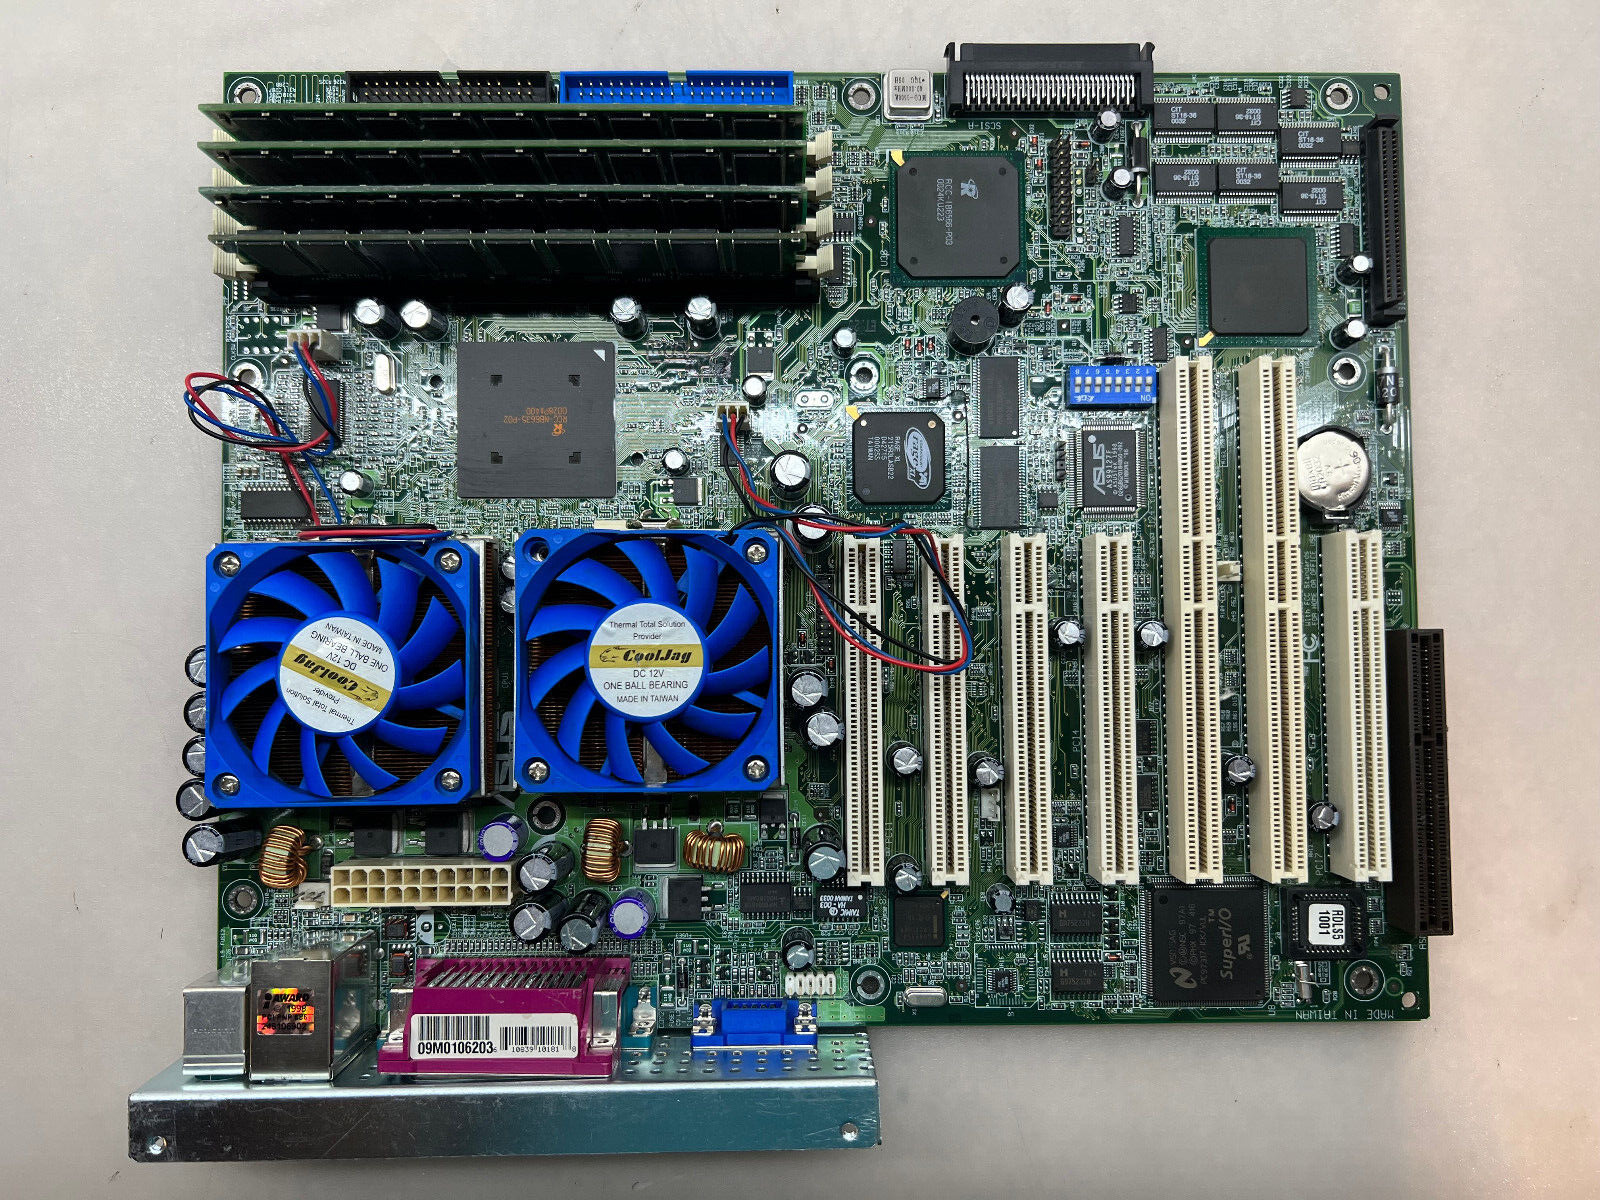 Asus CUR-DLS Dual Pentium III 933GB 133FSB Motherboard with 1GB RAM